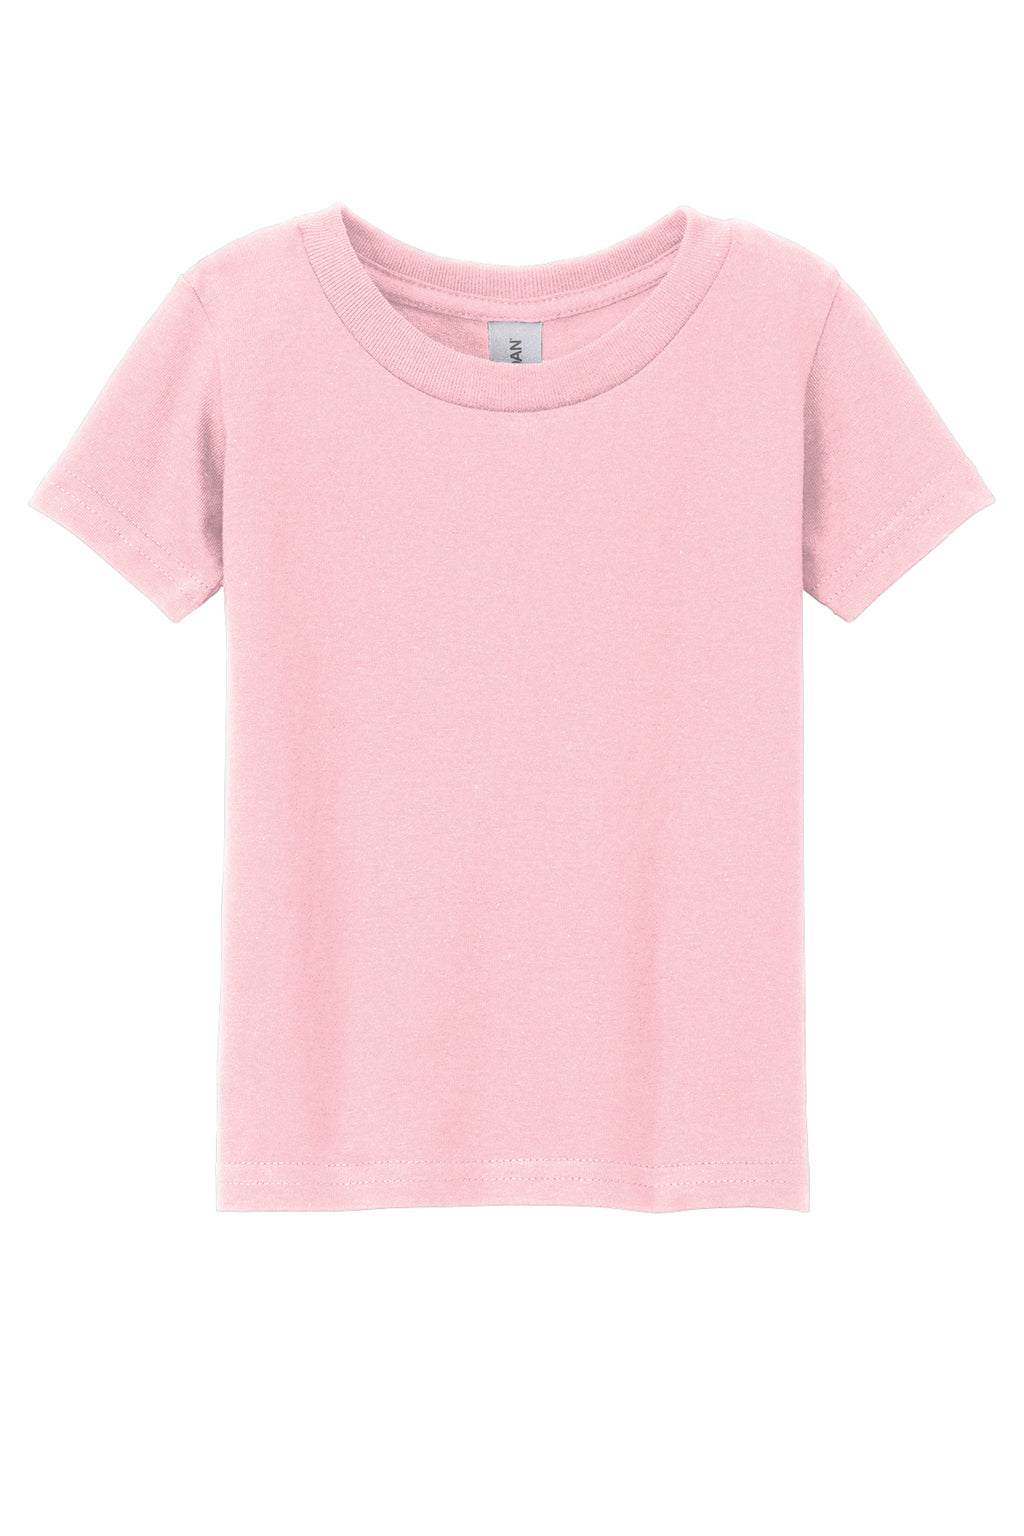 Gildan Toddler 100% Cotton Short Sleeve Shirts Light Pink